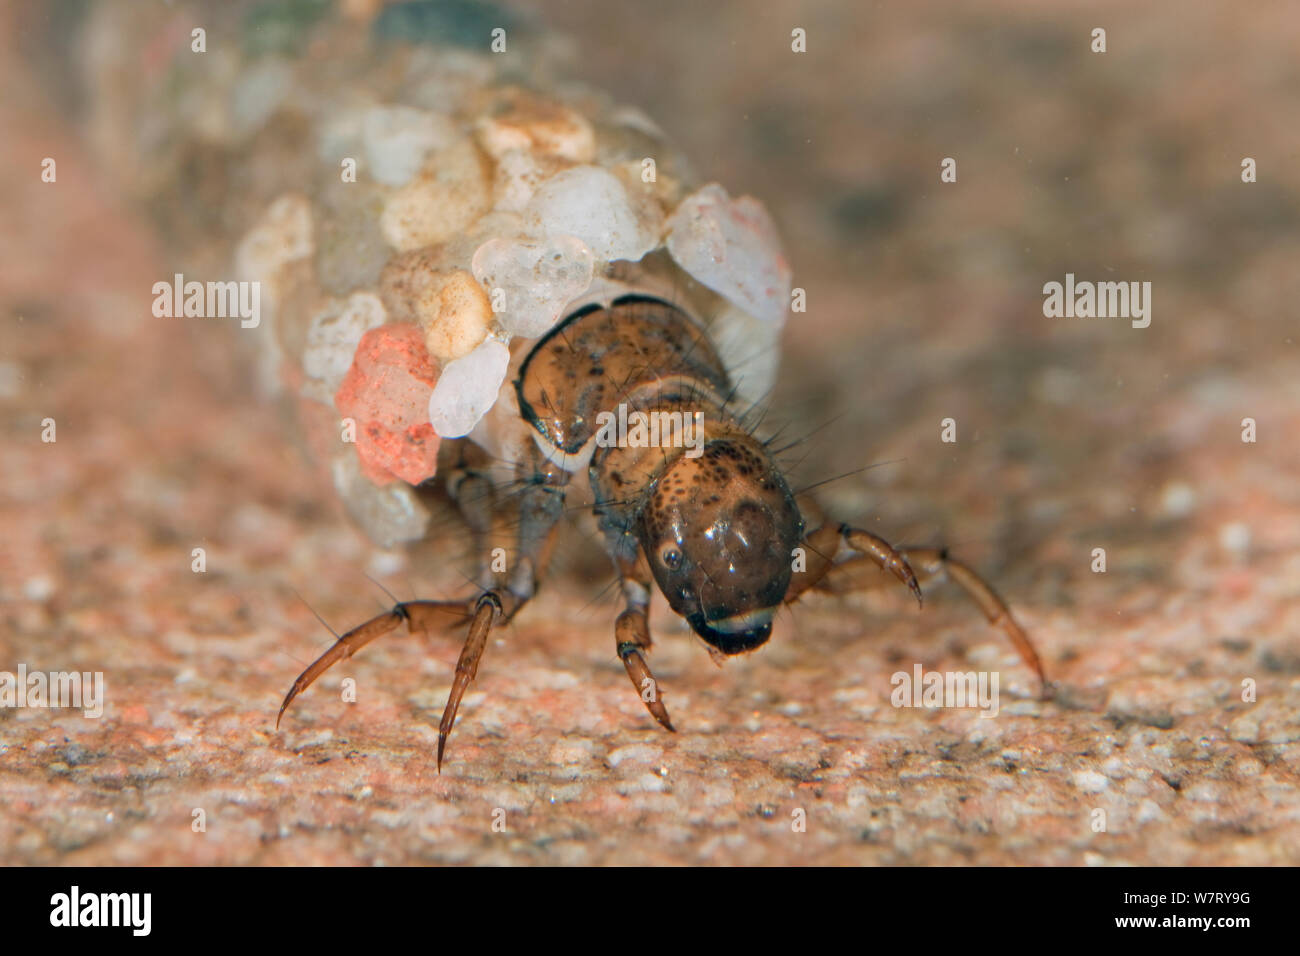 Caddisfly (Trichoptera) larvae in stone casing, walking underwater on stone, Germany Stock Photo